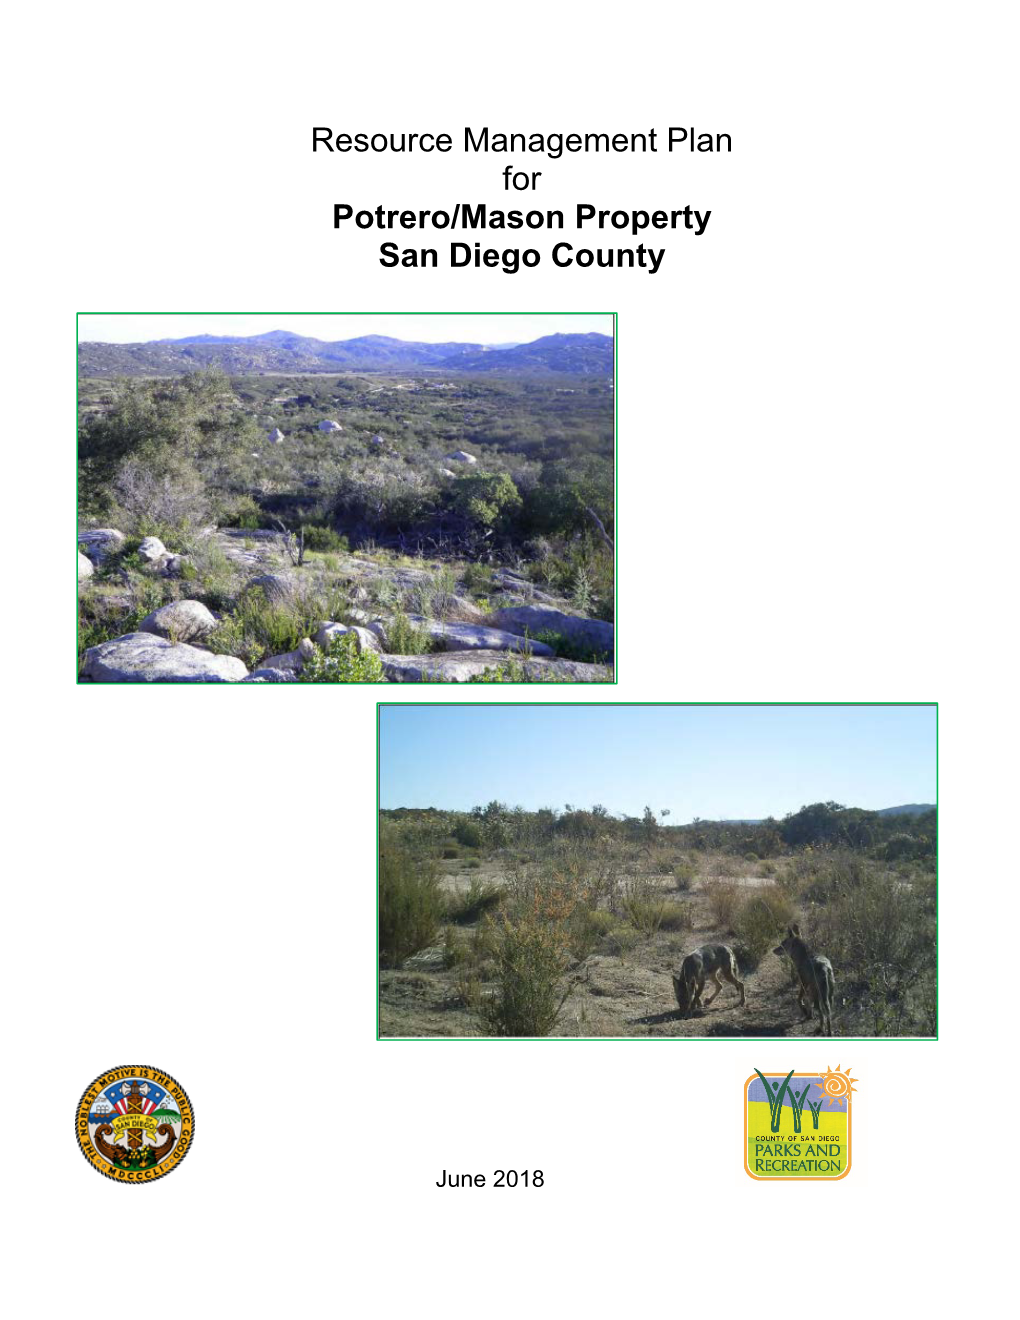 Resource Management Plan for Potrero/Mason Property San Diego County